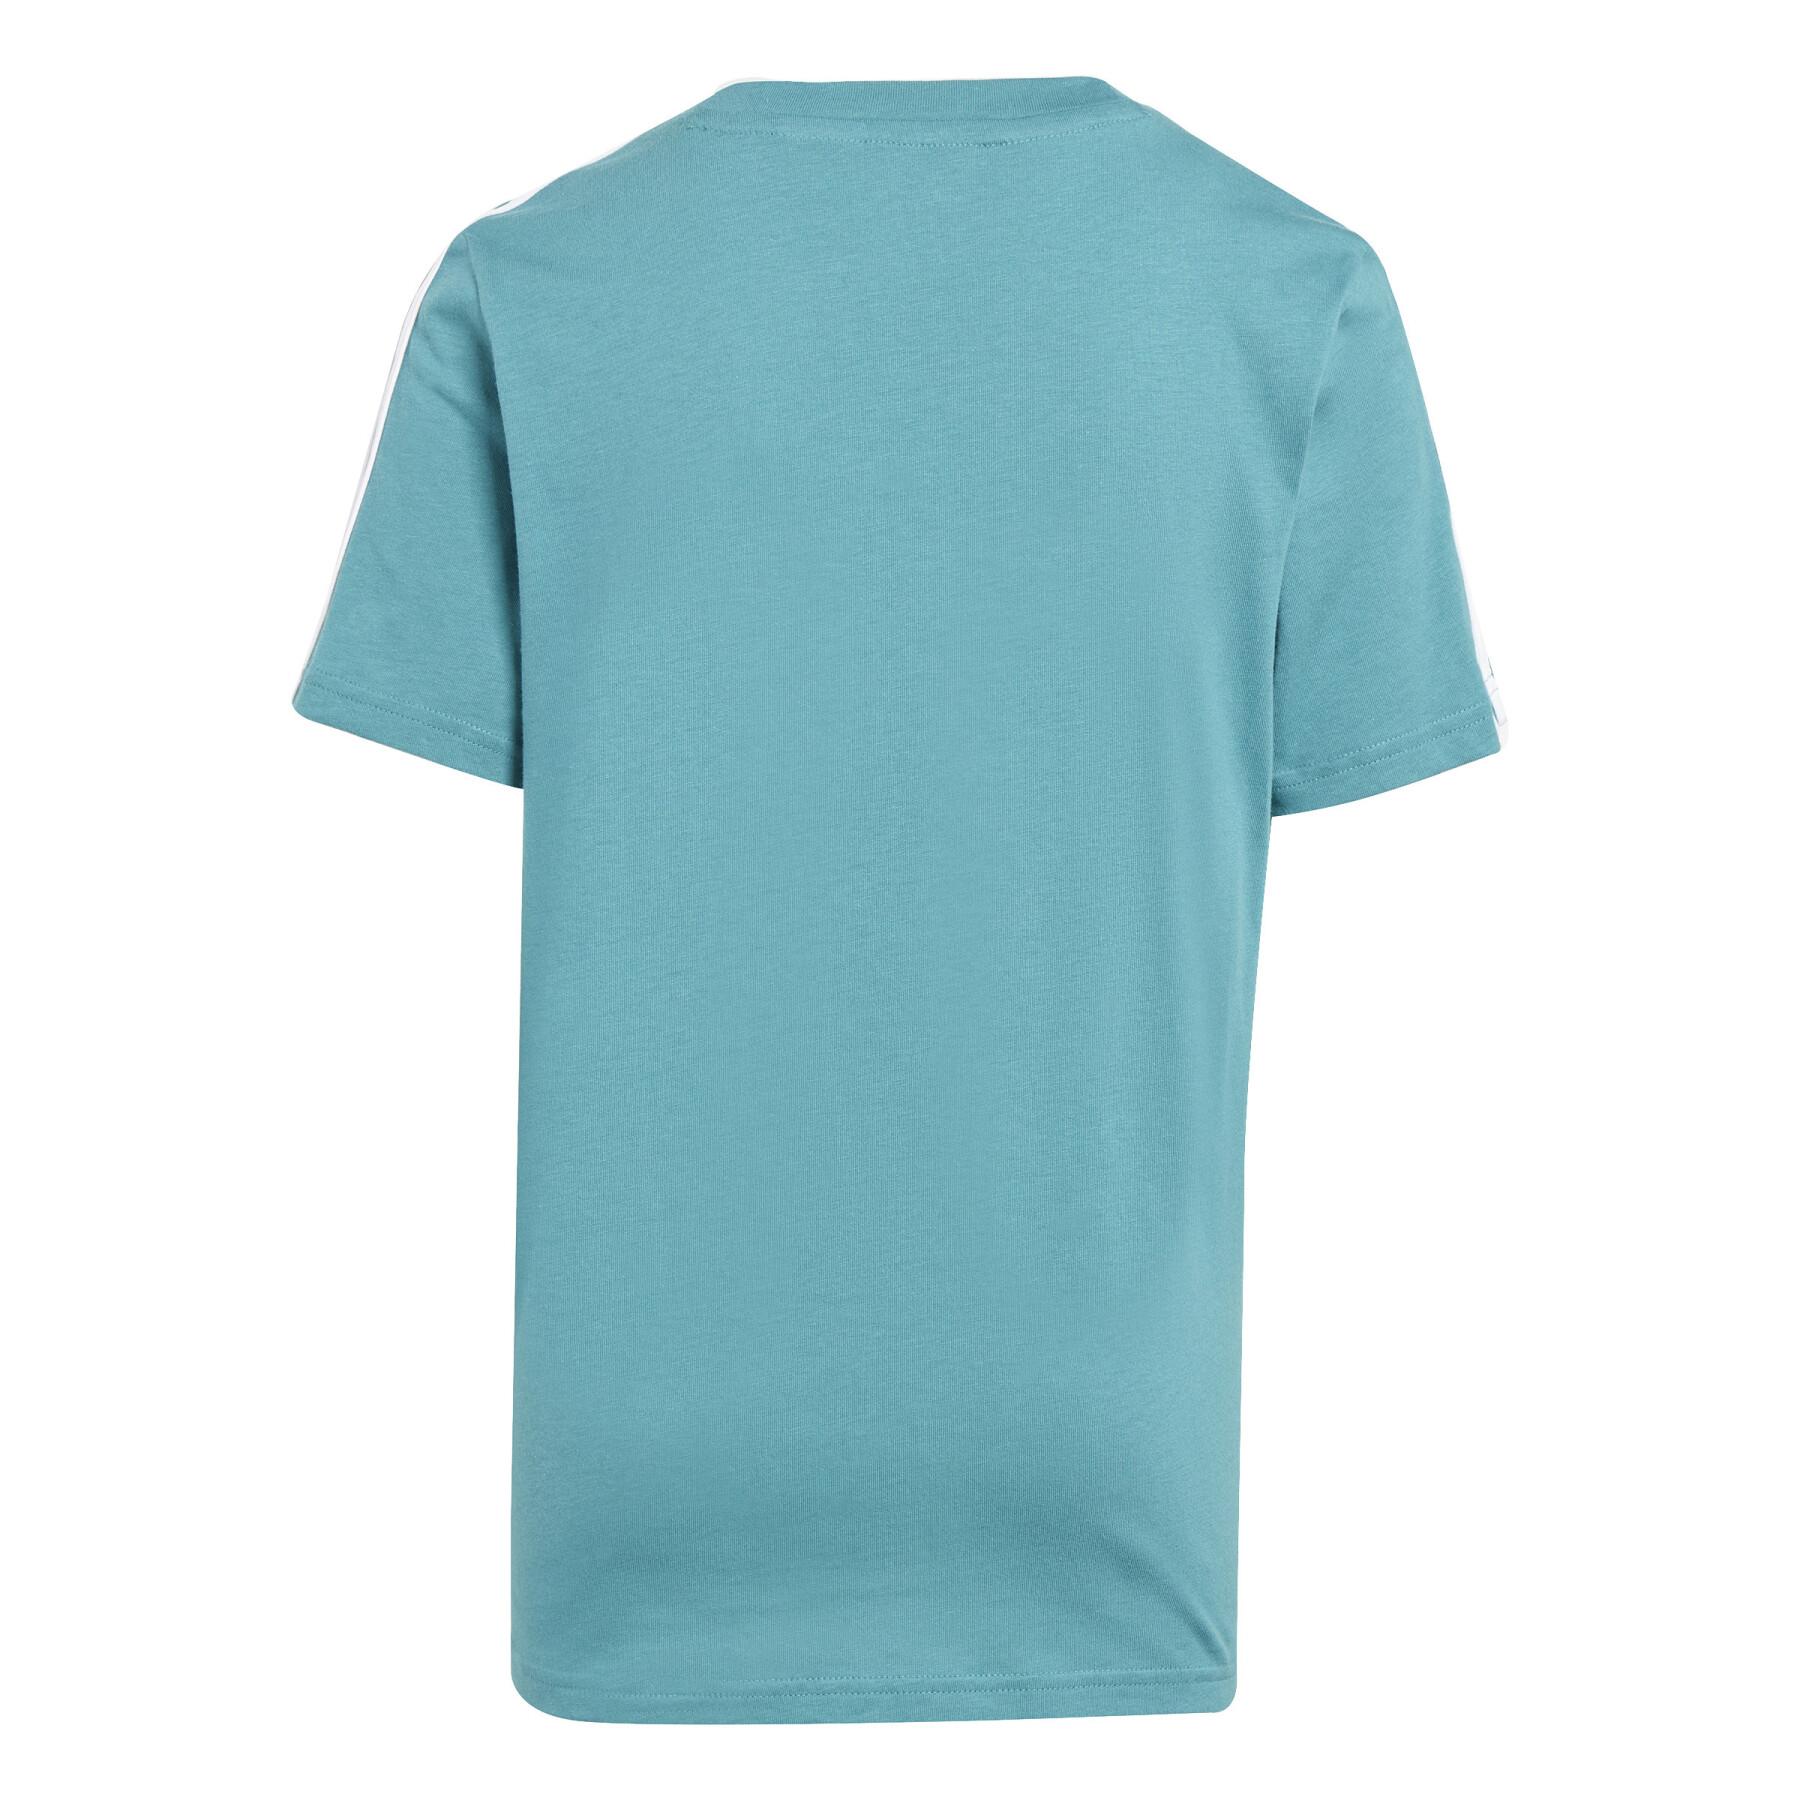 Lifestyle - Child\'s Lifestyle - Colorblock Tiberio Male T-shirt adidas 3-Stripes - T-shirts